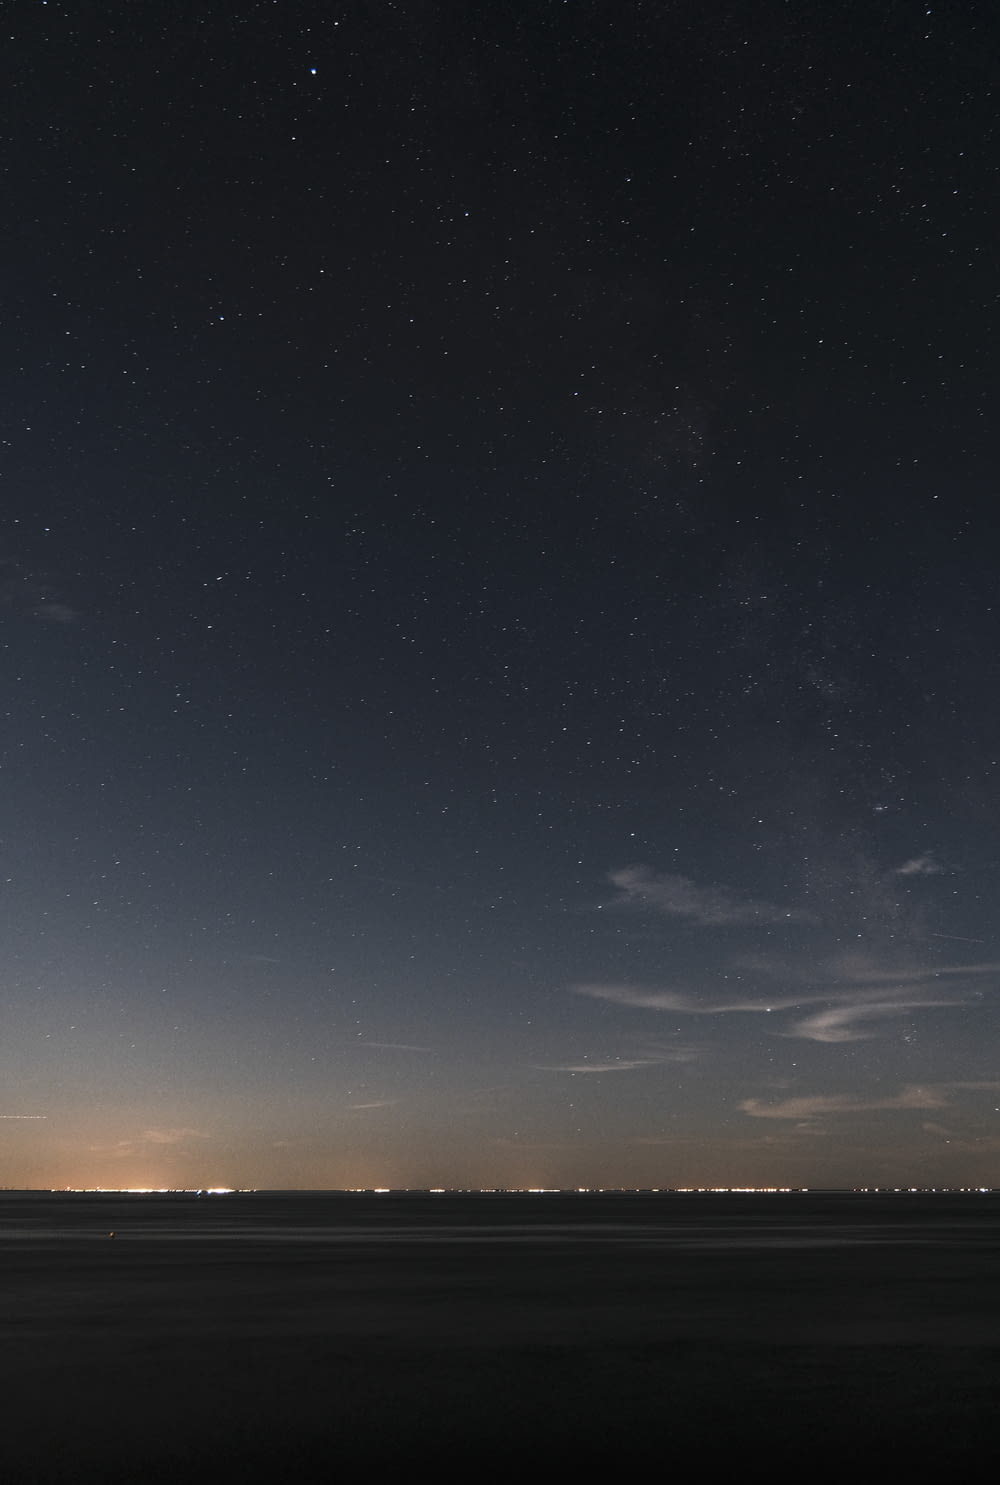 a starry night sky over a beach